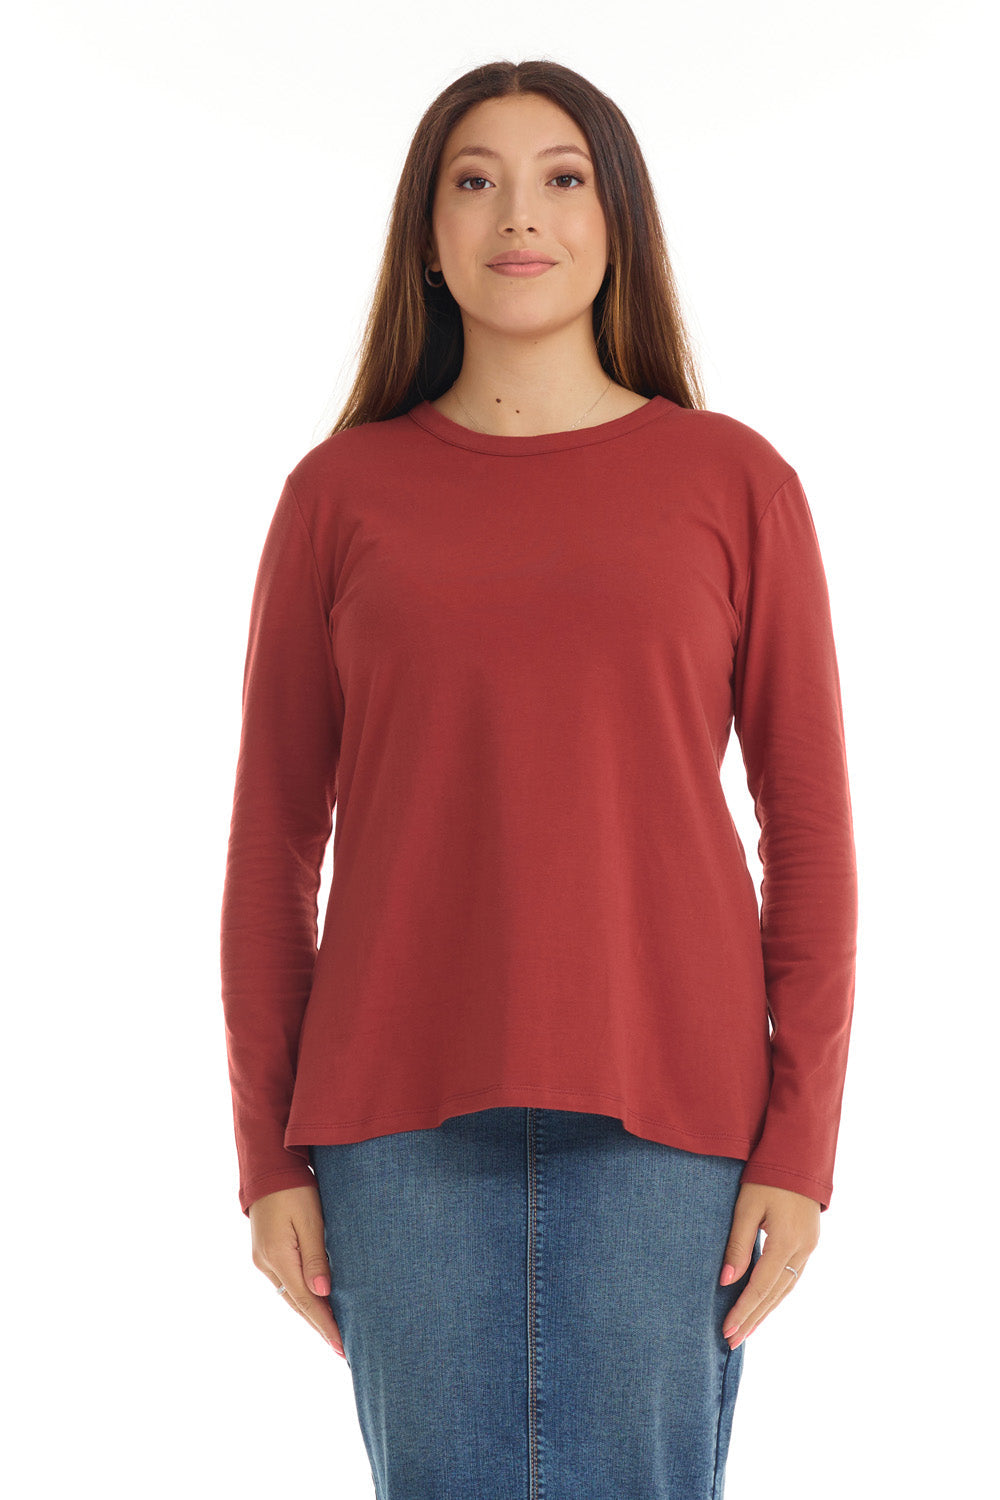 basic loose cotton shirt for women 